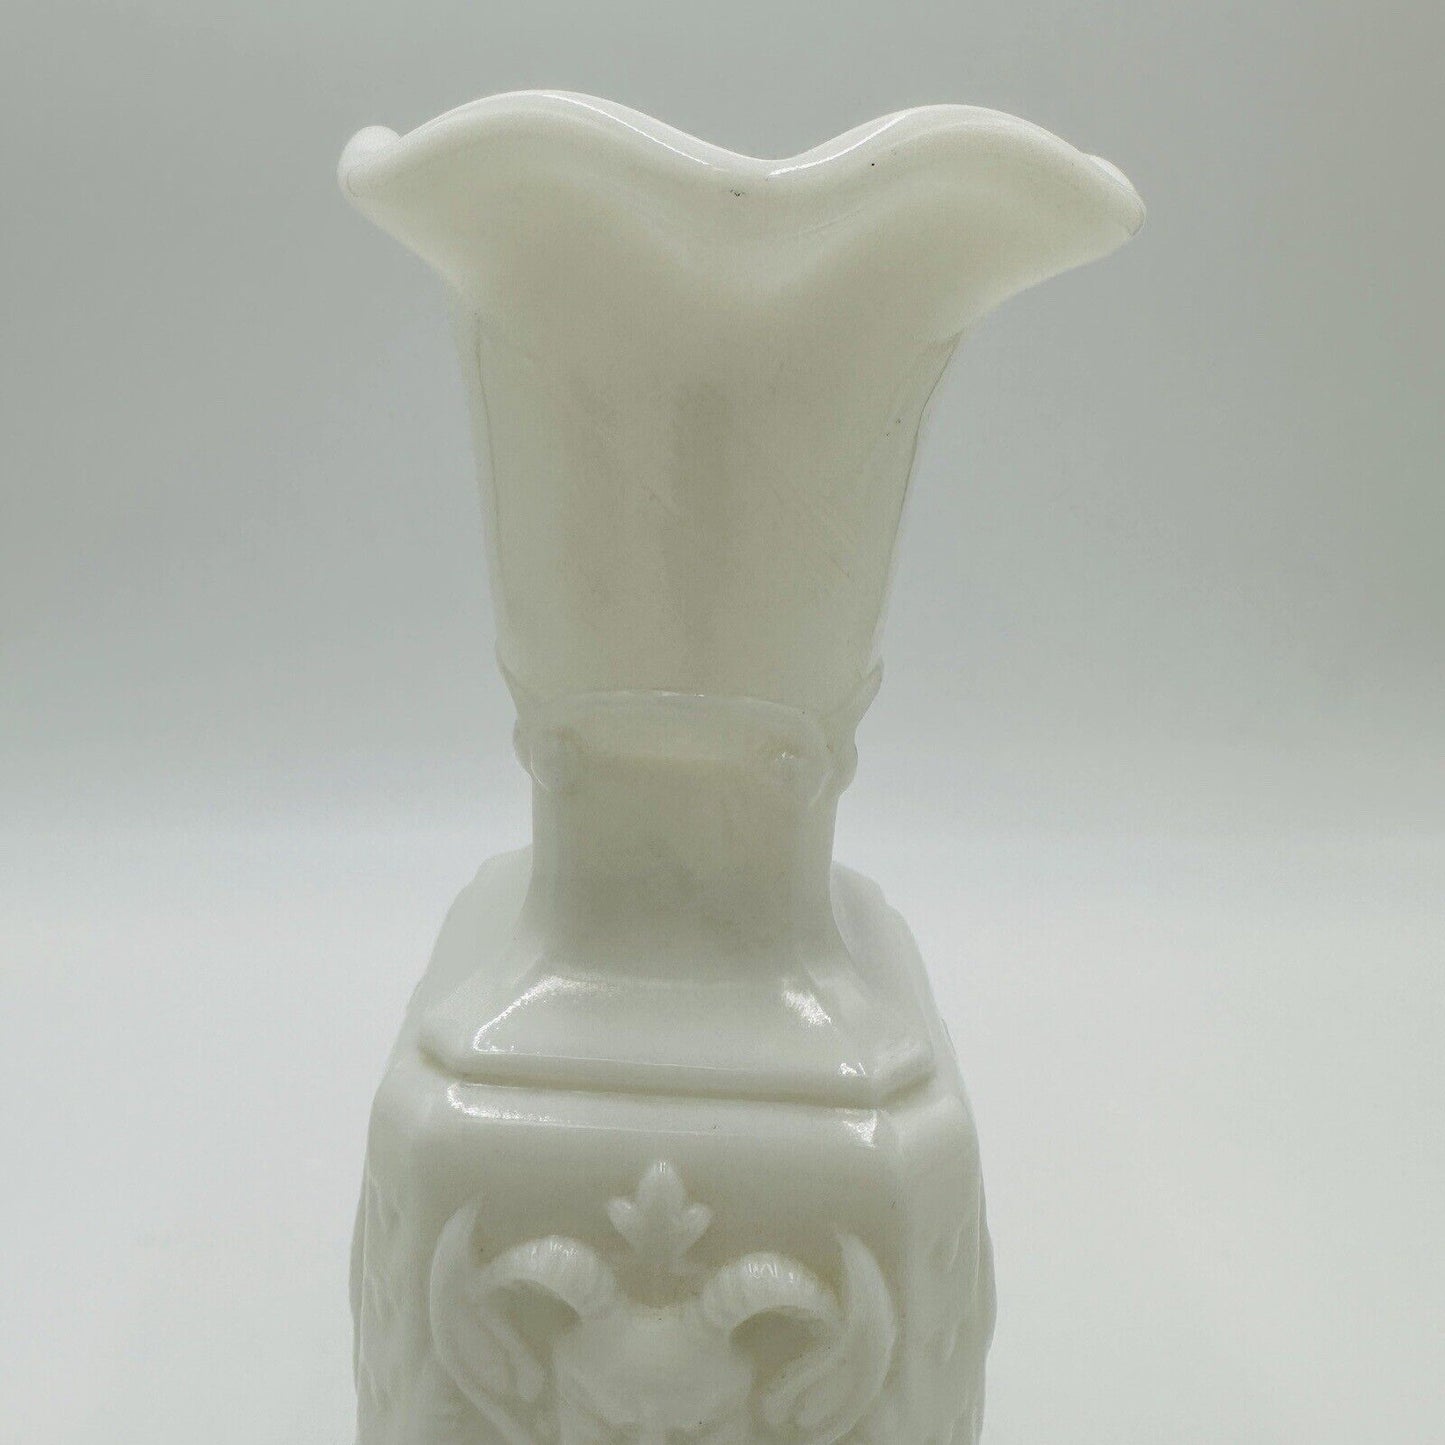 Masque Drama Glass Jester & Flowers Vase Evil Face Vintage Imperial White